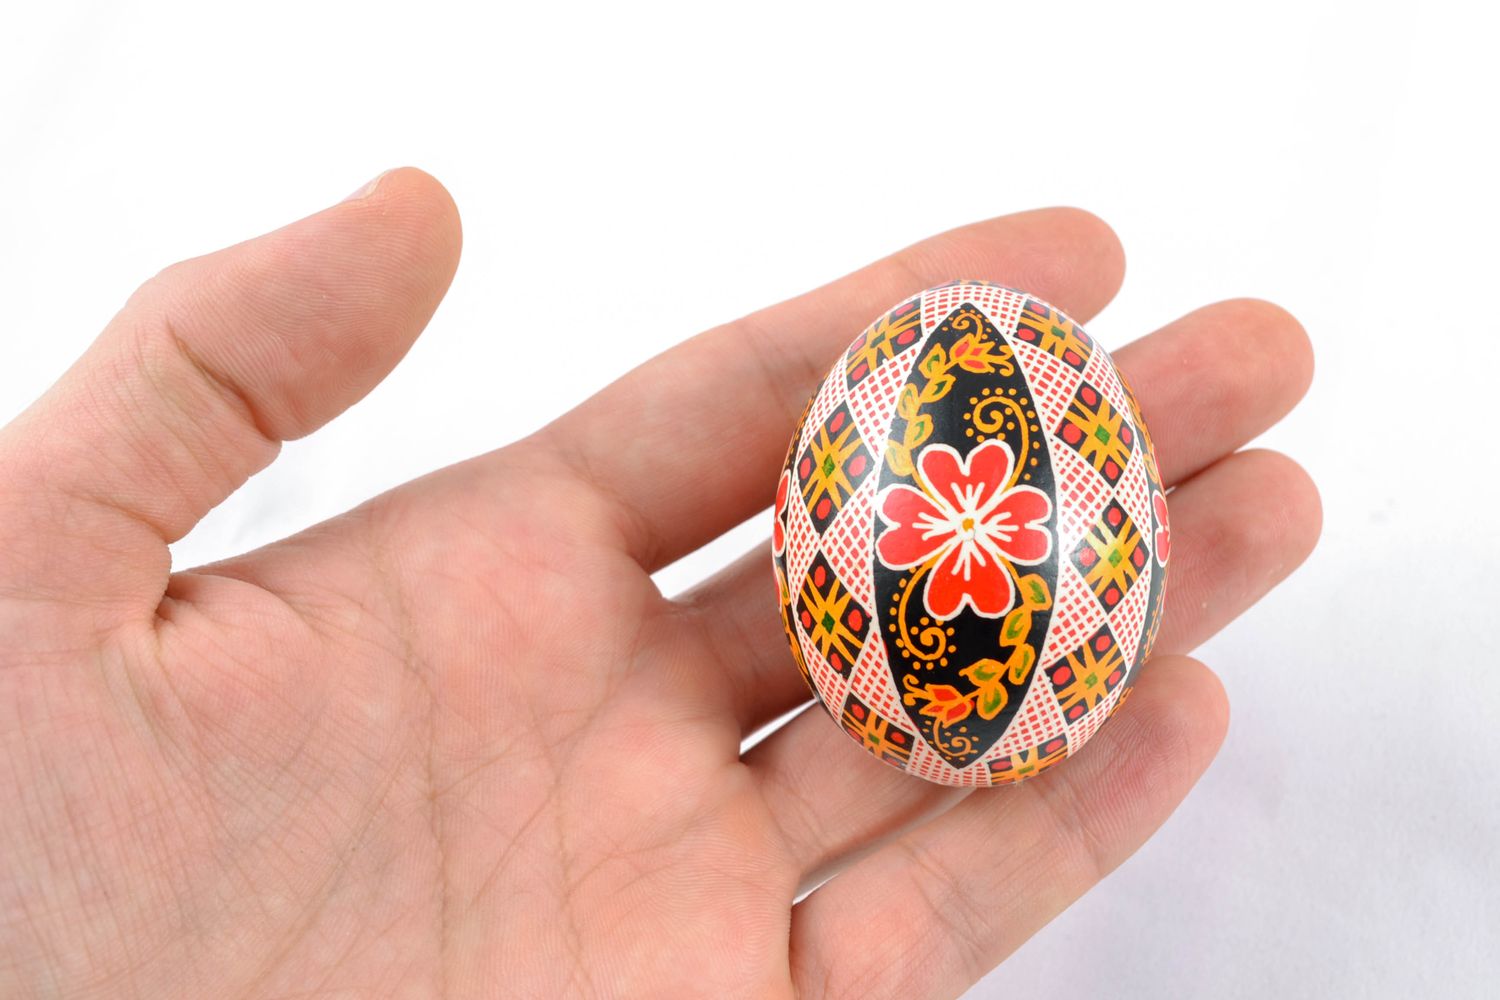 Handmade decorative Easter egg photo 3